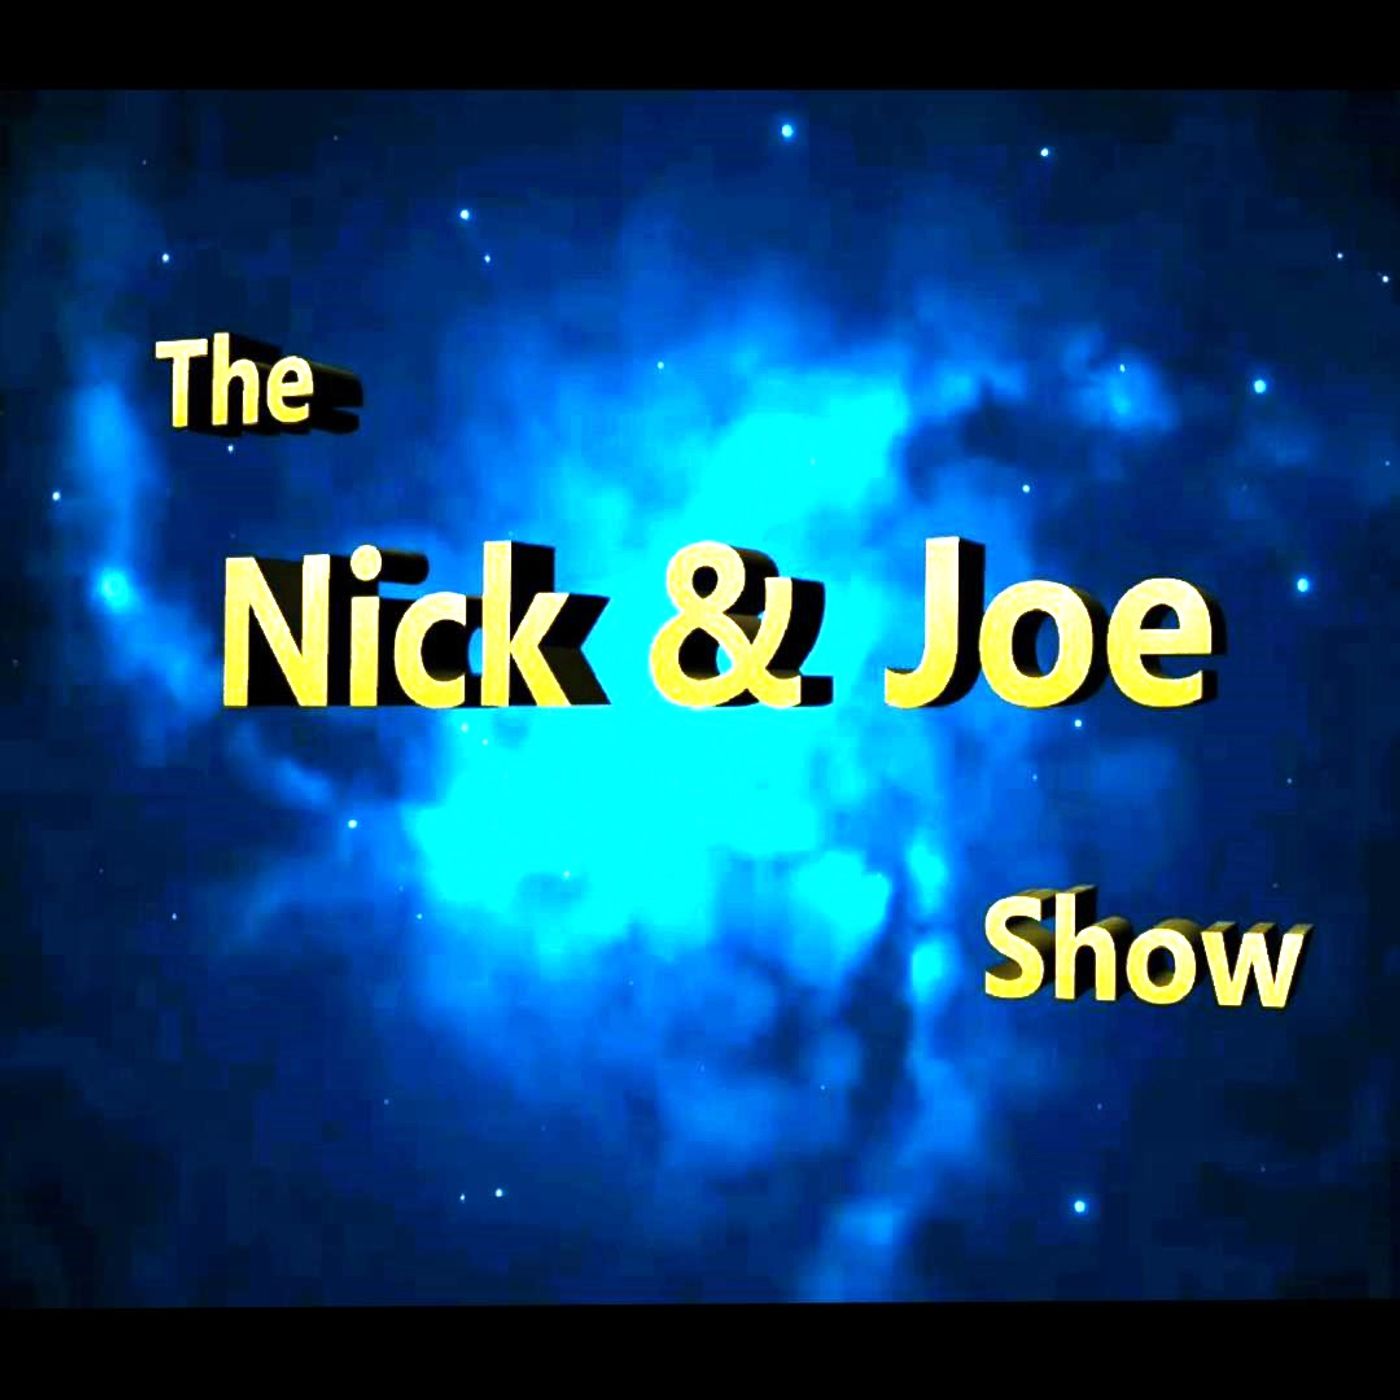 The Nick & Joe Show